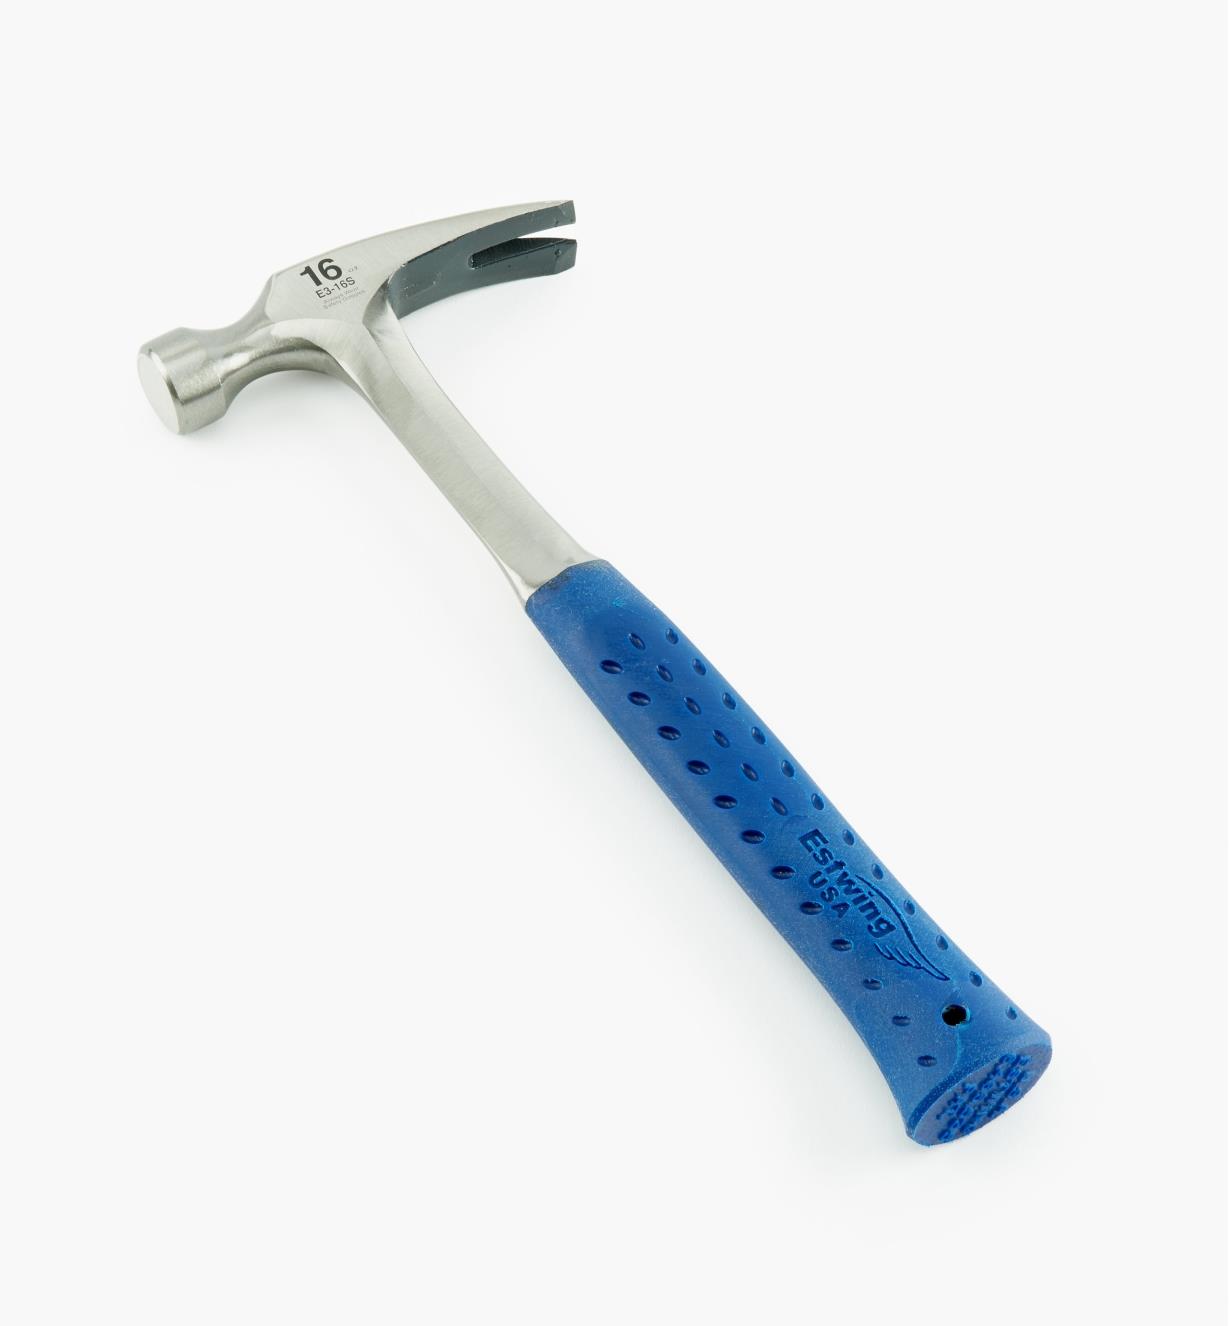 69K1202 - 16 oz Estwing Ripping Hammer, nylon handle